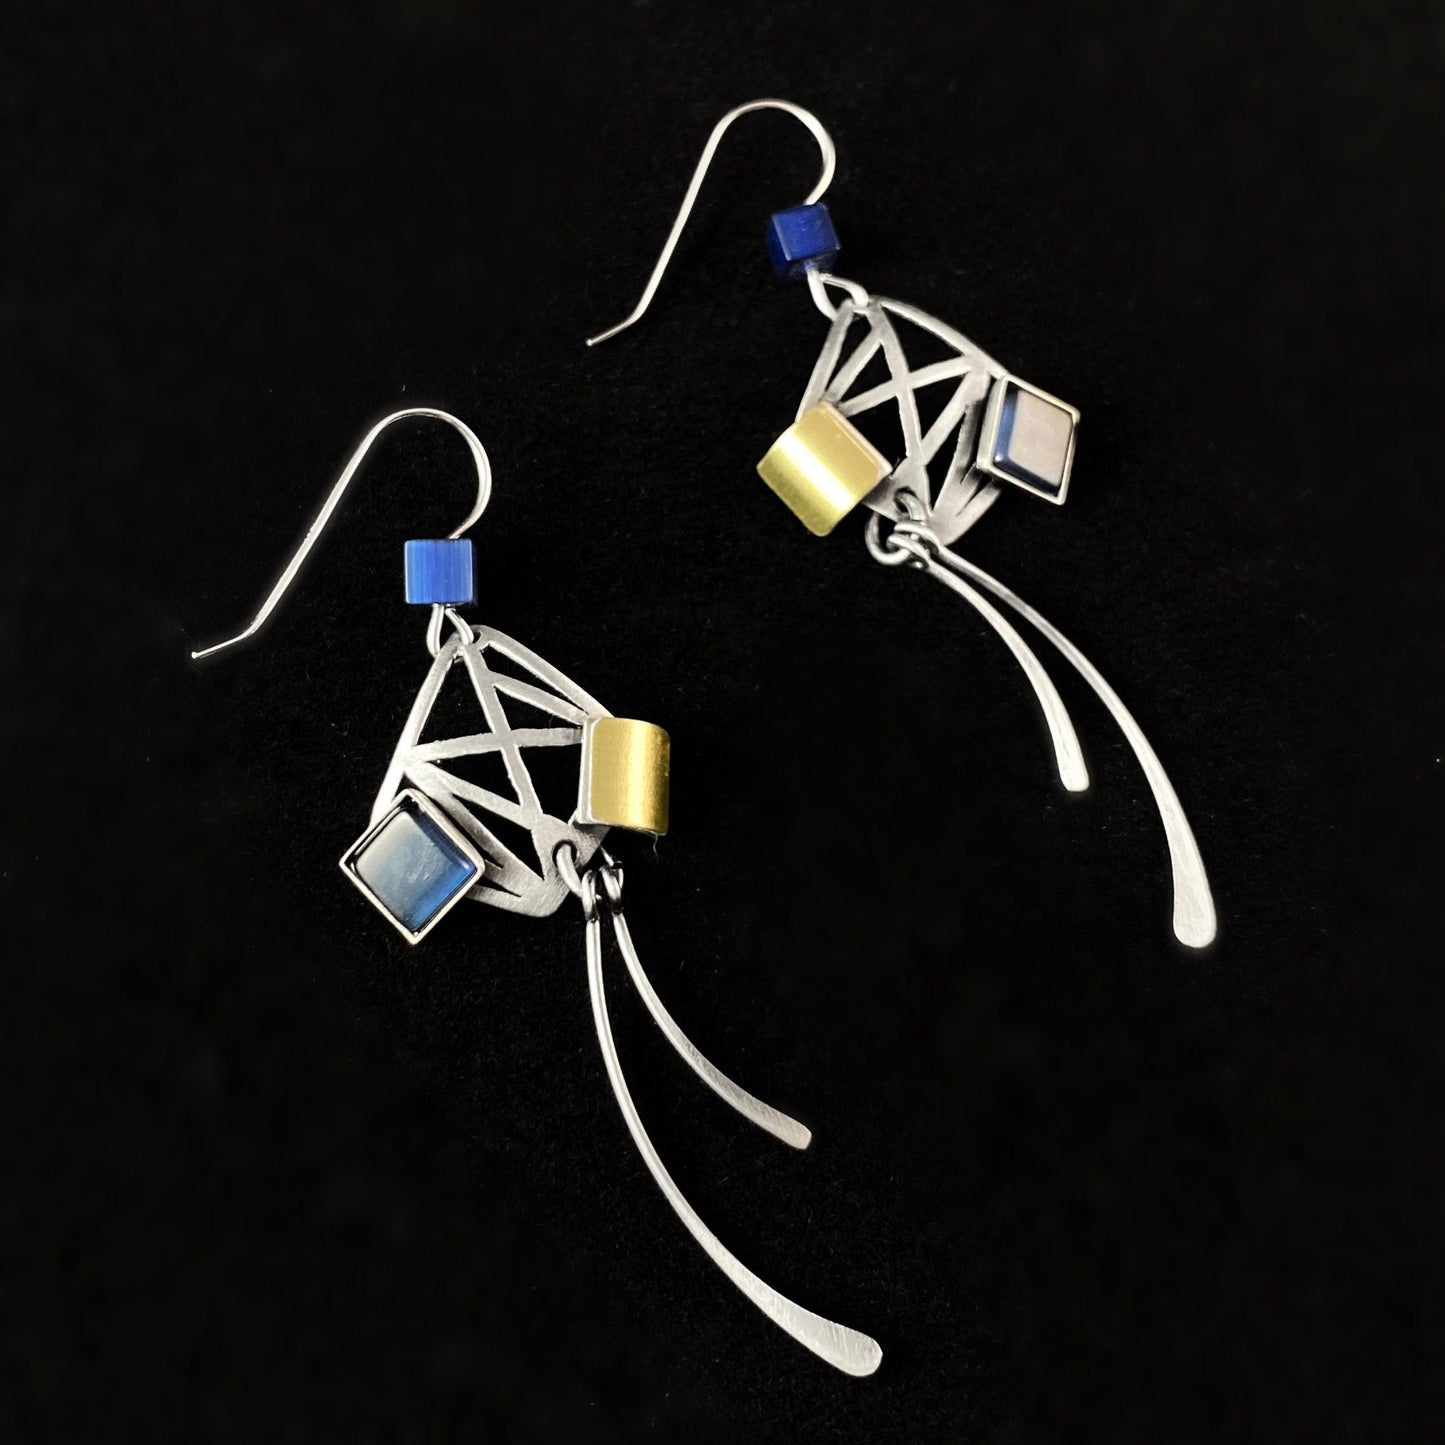 Lightweight Handmade Geometric Aluminum Earrings, Silver and Blue Dangle